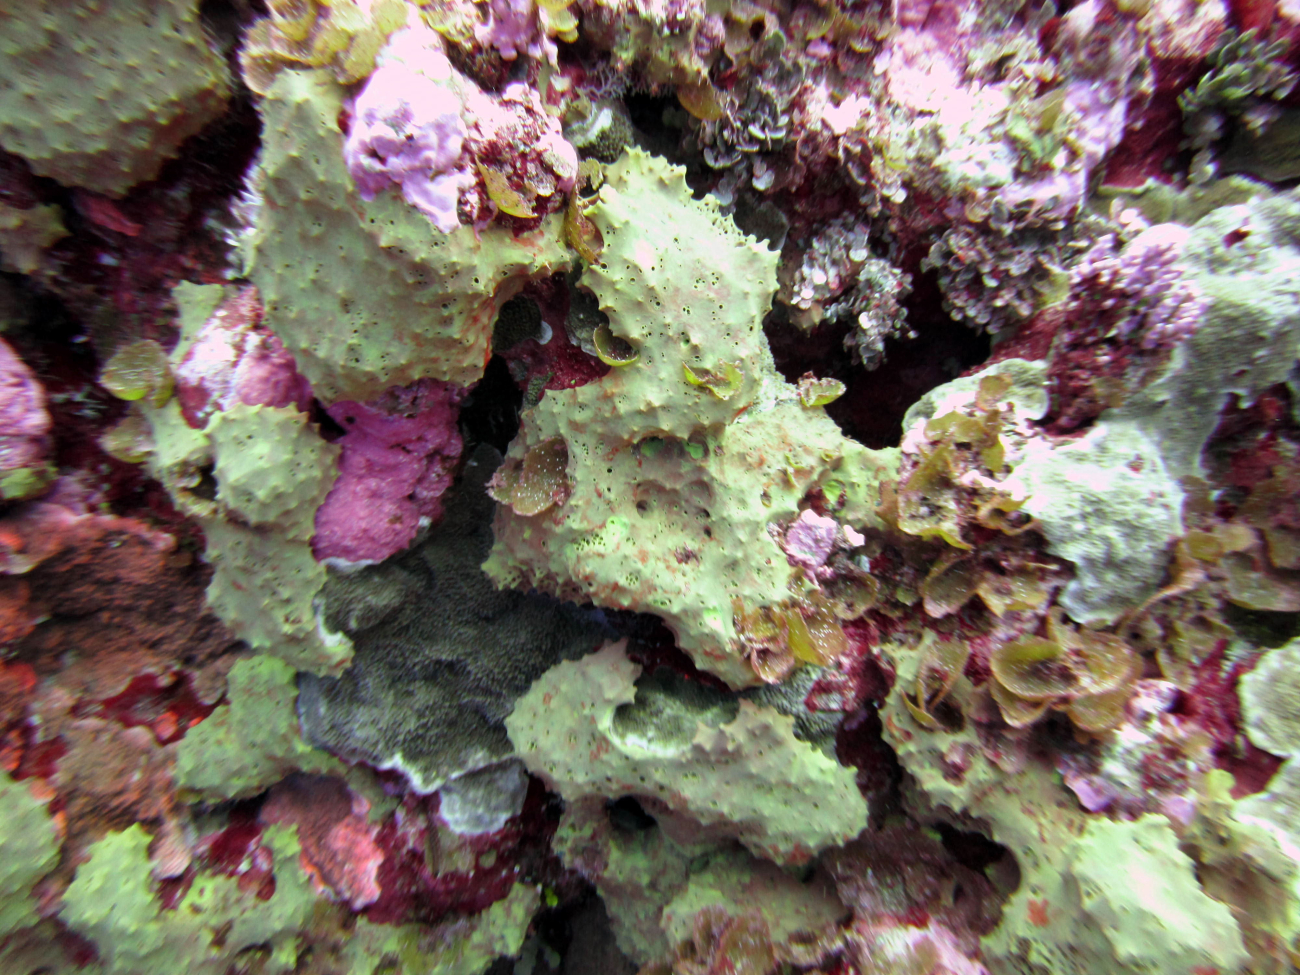 Green encrusting sponge?? over pink coralline algae